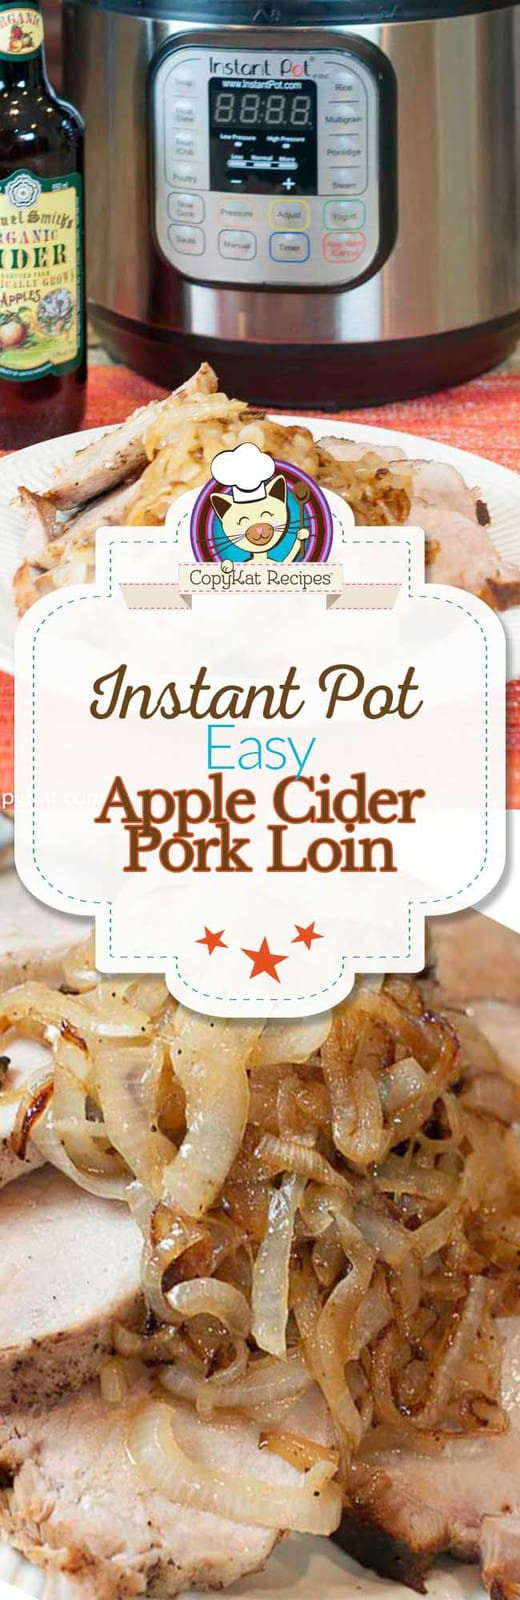 Instant Pot Pork Loin Recipes
 Instant Pot Apple Cider Pork Loin